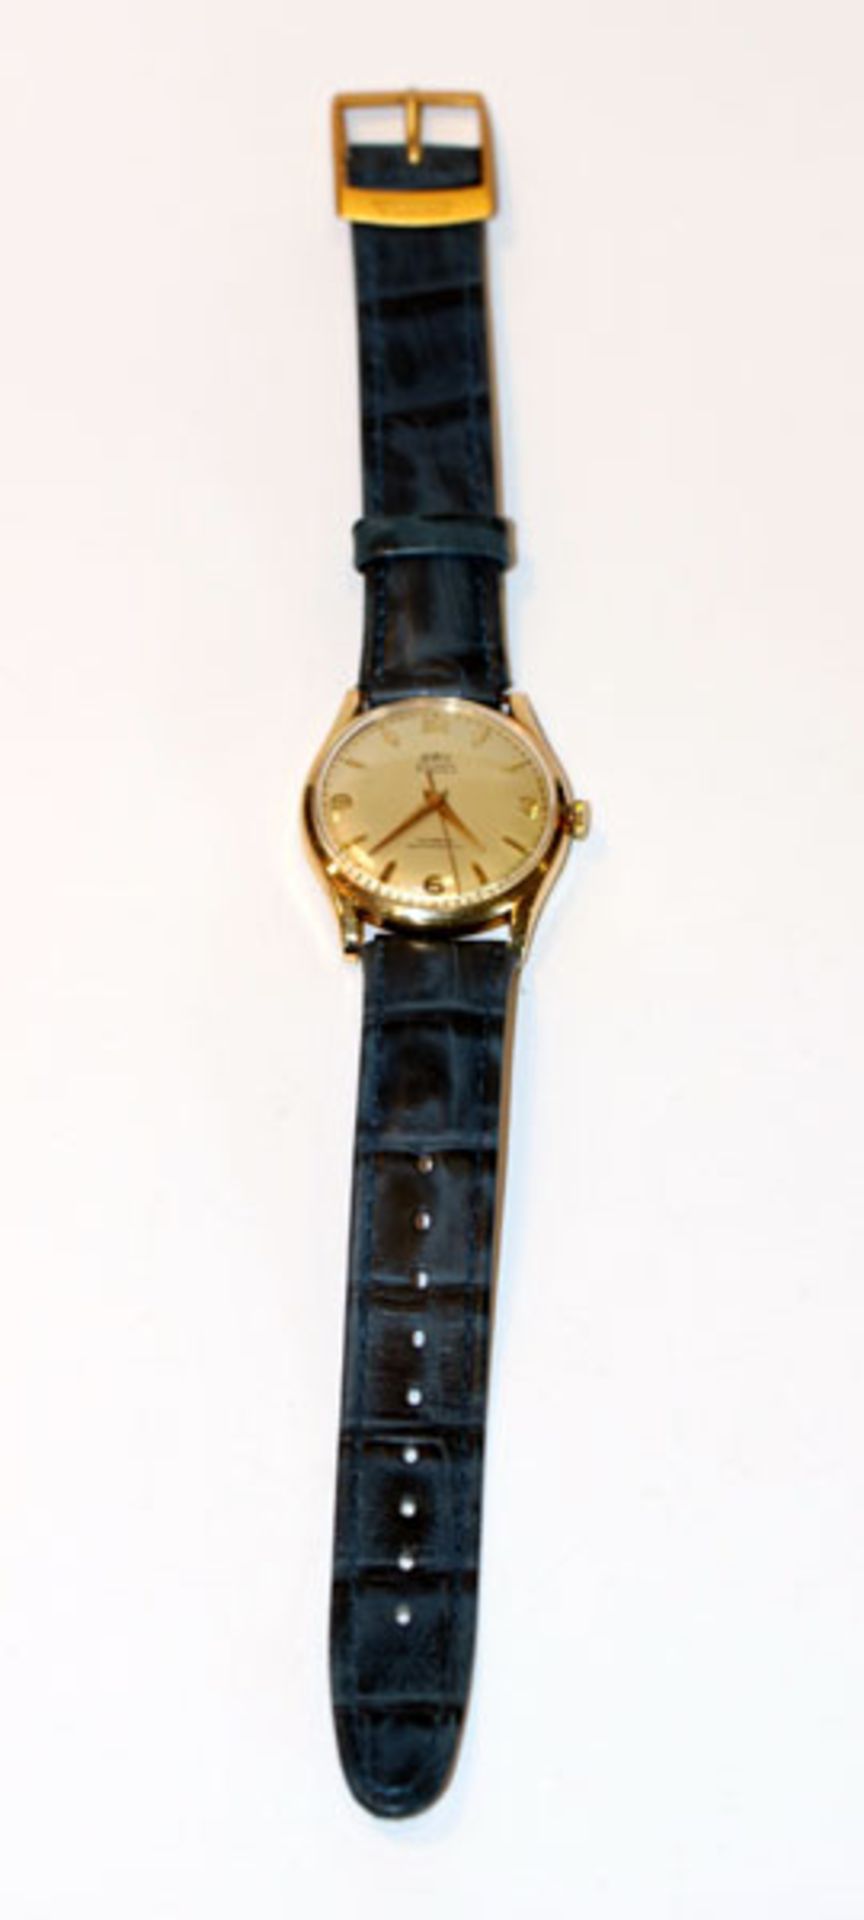 BWC Automatic Armbanduhr, 14, K Gelbgold Gehäuse, intakt, an blauem Lederarmband, leichte